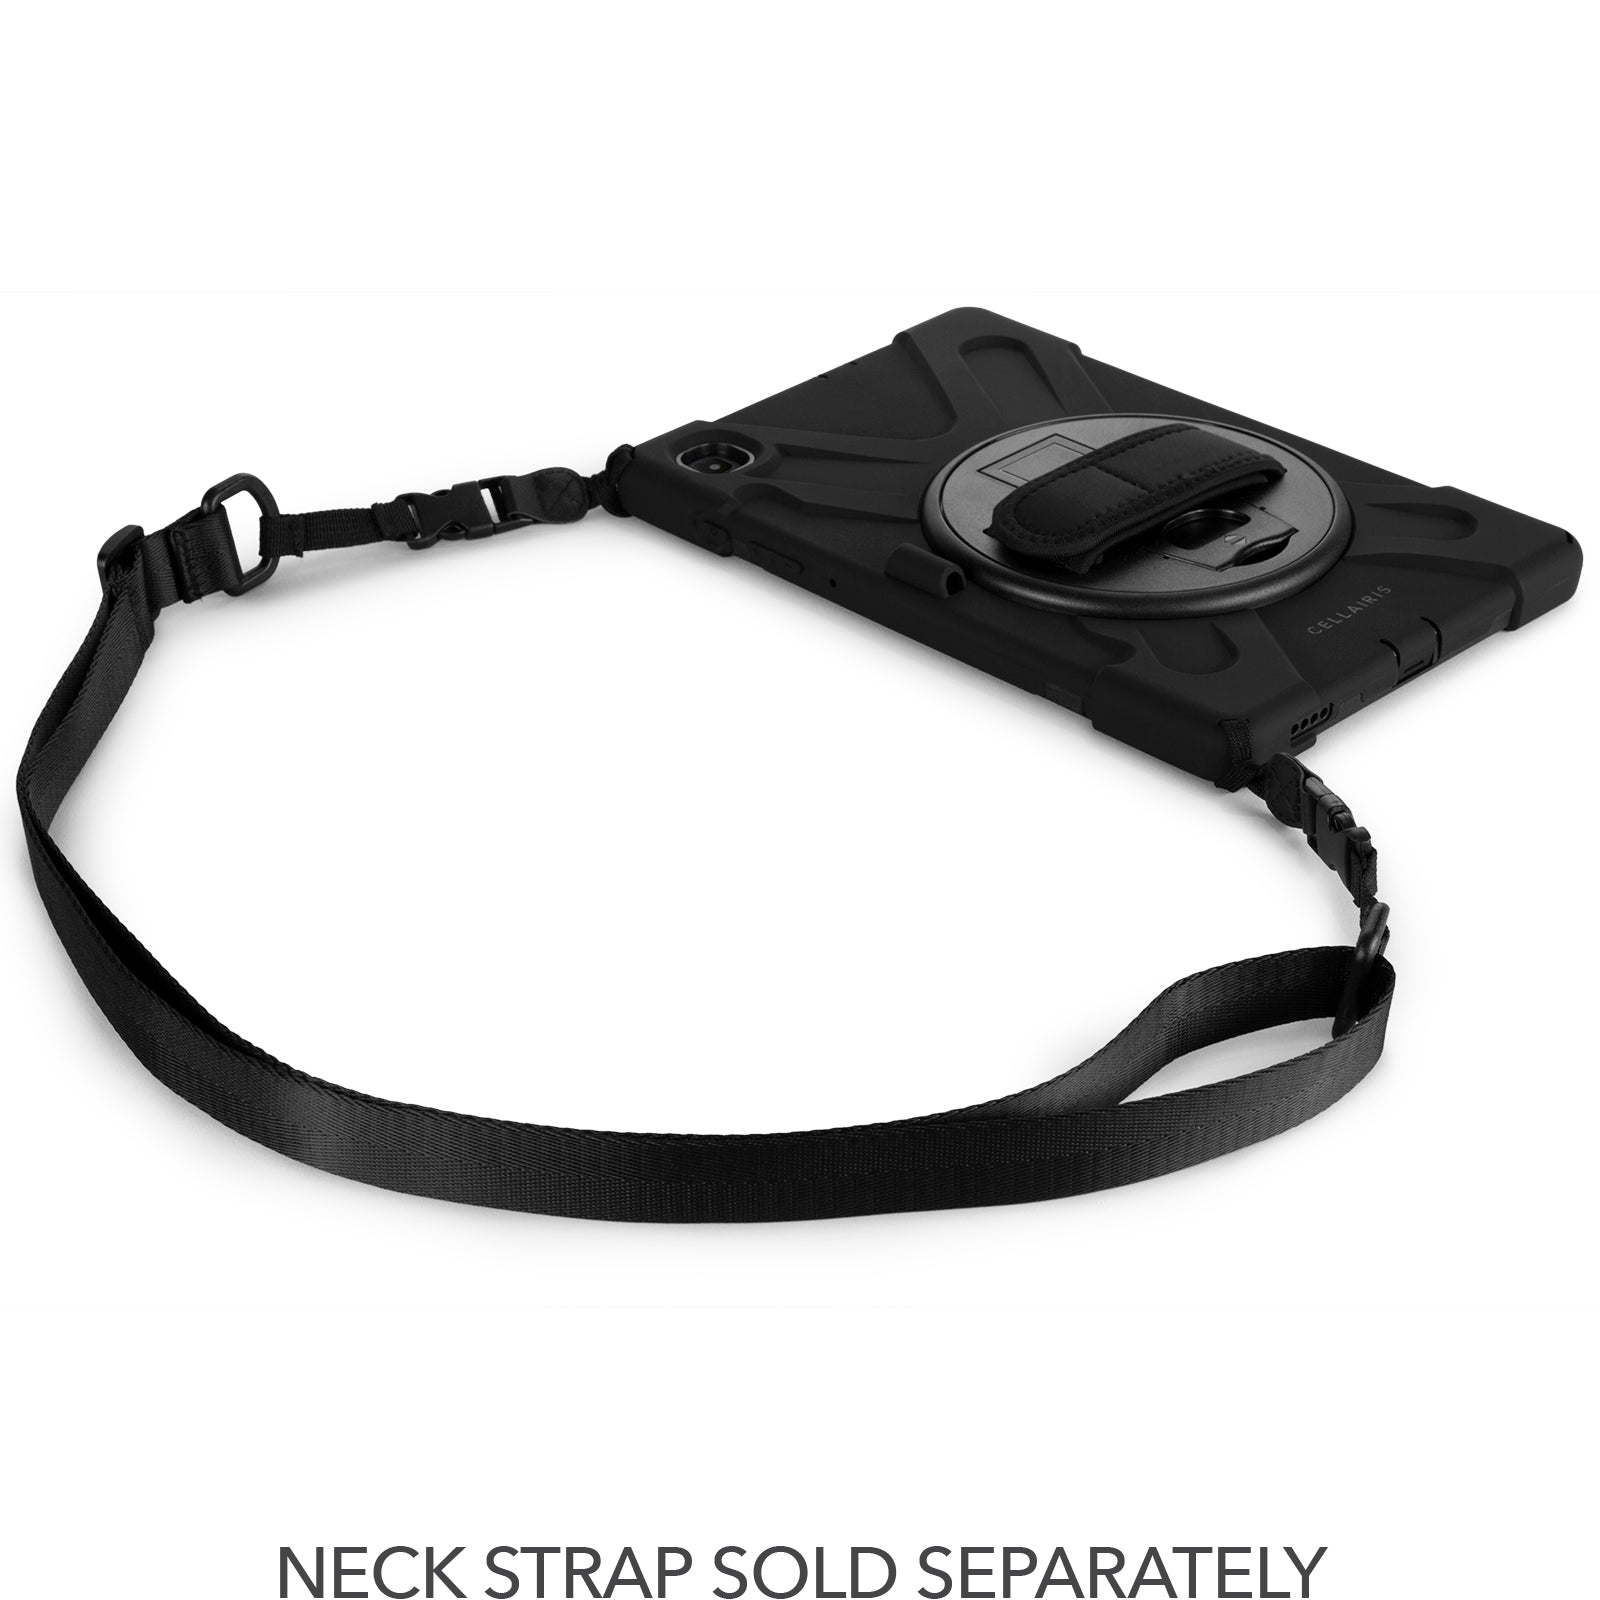 Rapture Rugged - Samsung Tab S6 Lite 10.4" P610/ P613 w/ Kickstand & Hand Strap Black Tablet Cases